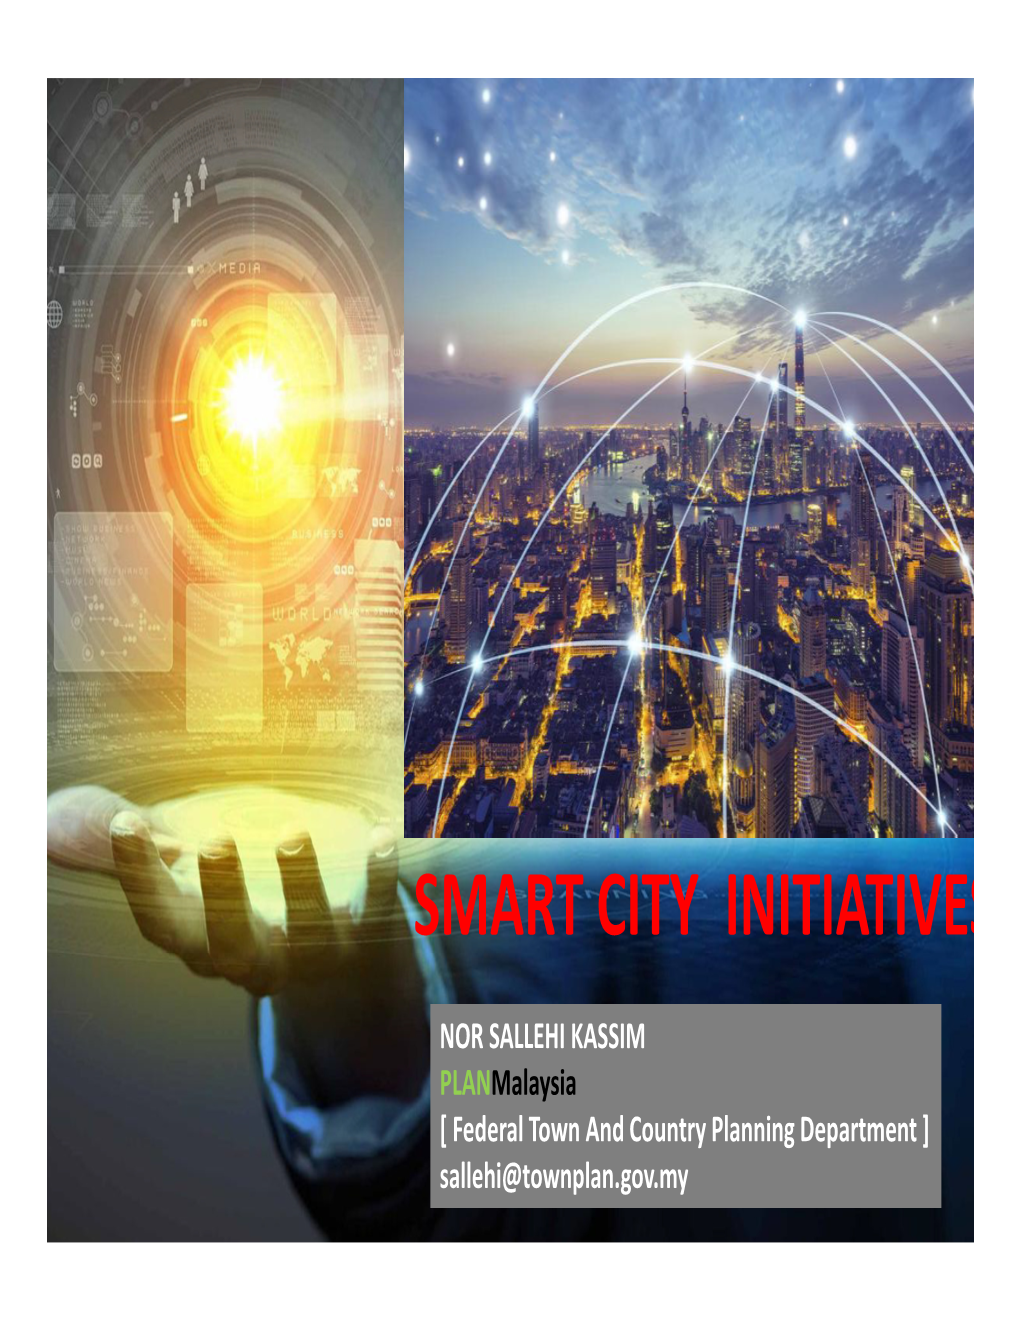 Malaysia's Smart City Initiatives